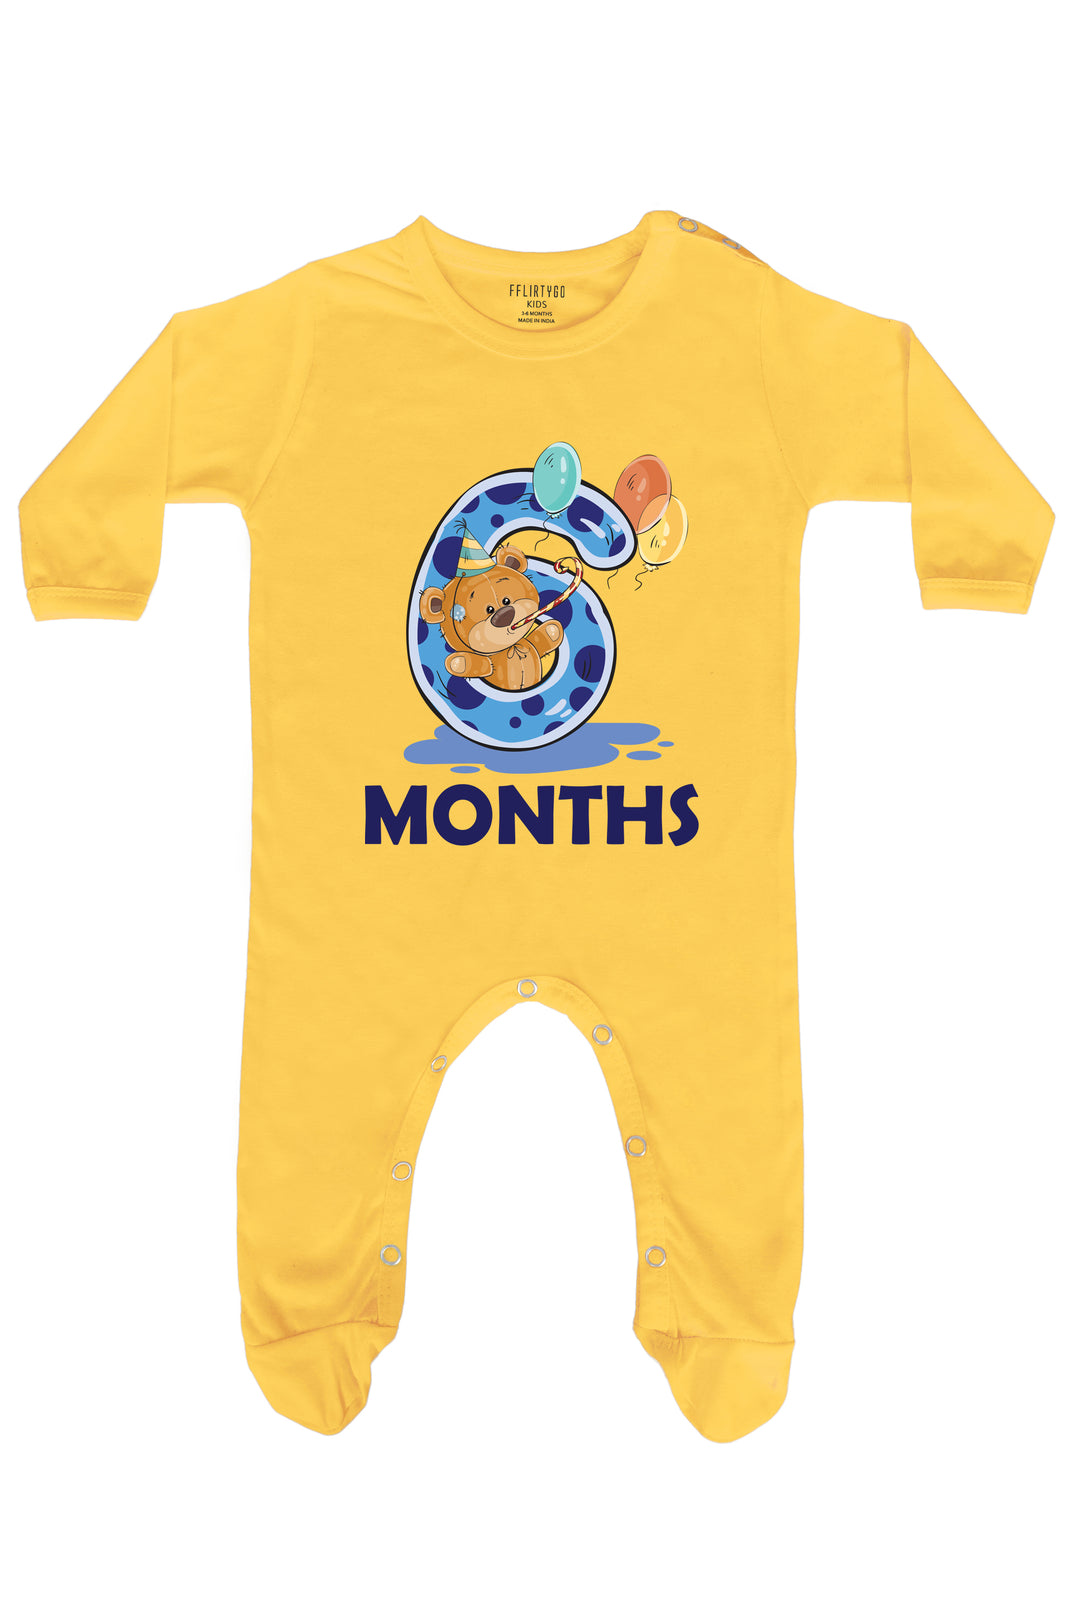 Six Months Milestone Baby Romper | Onesies